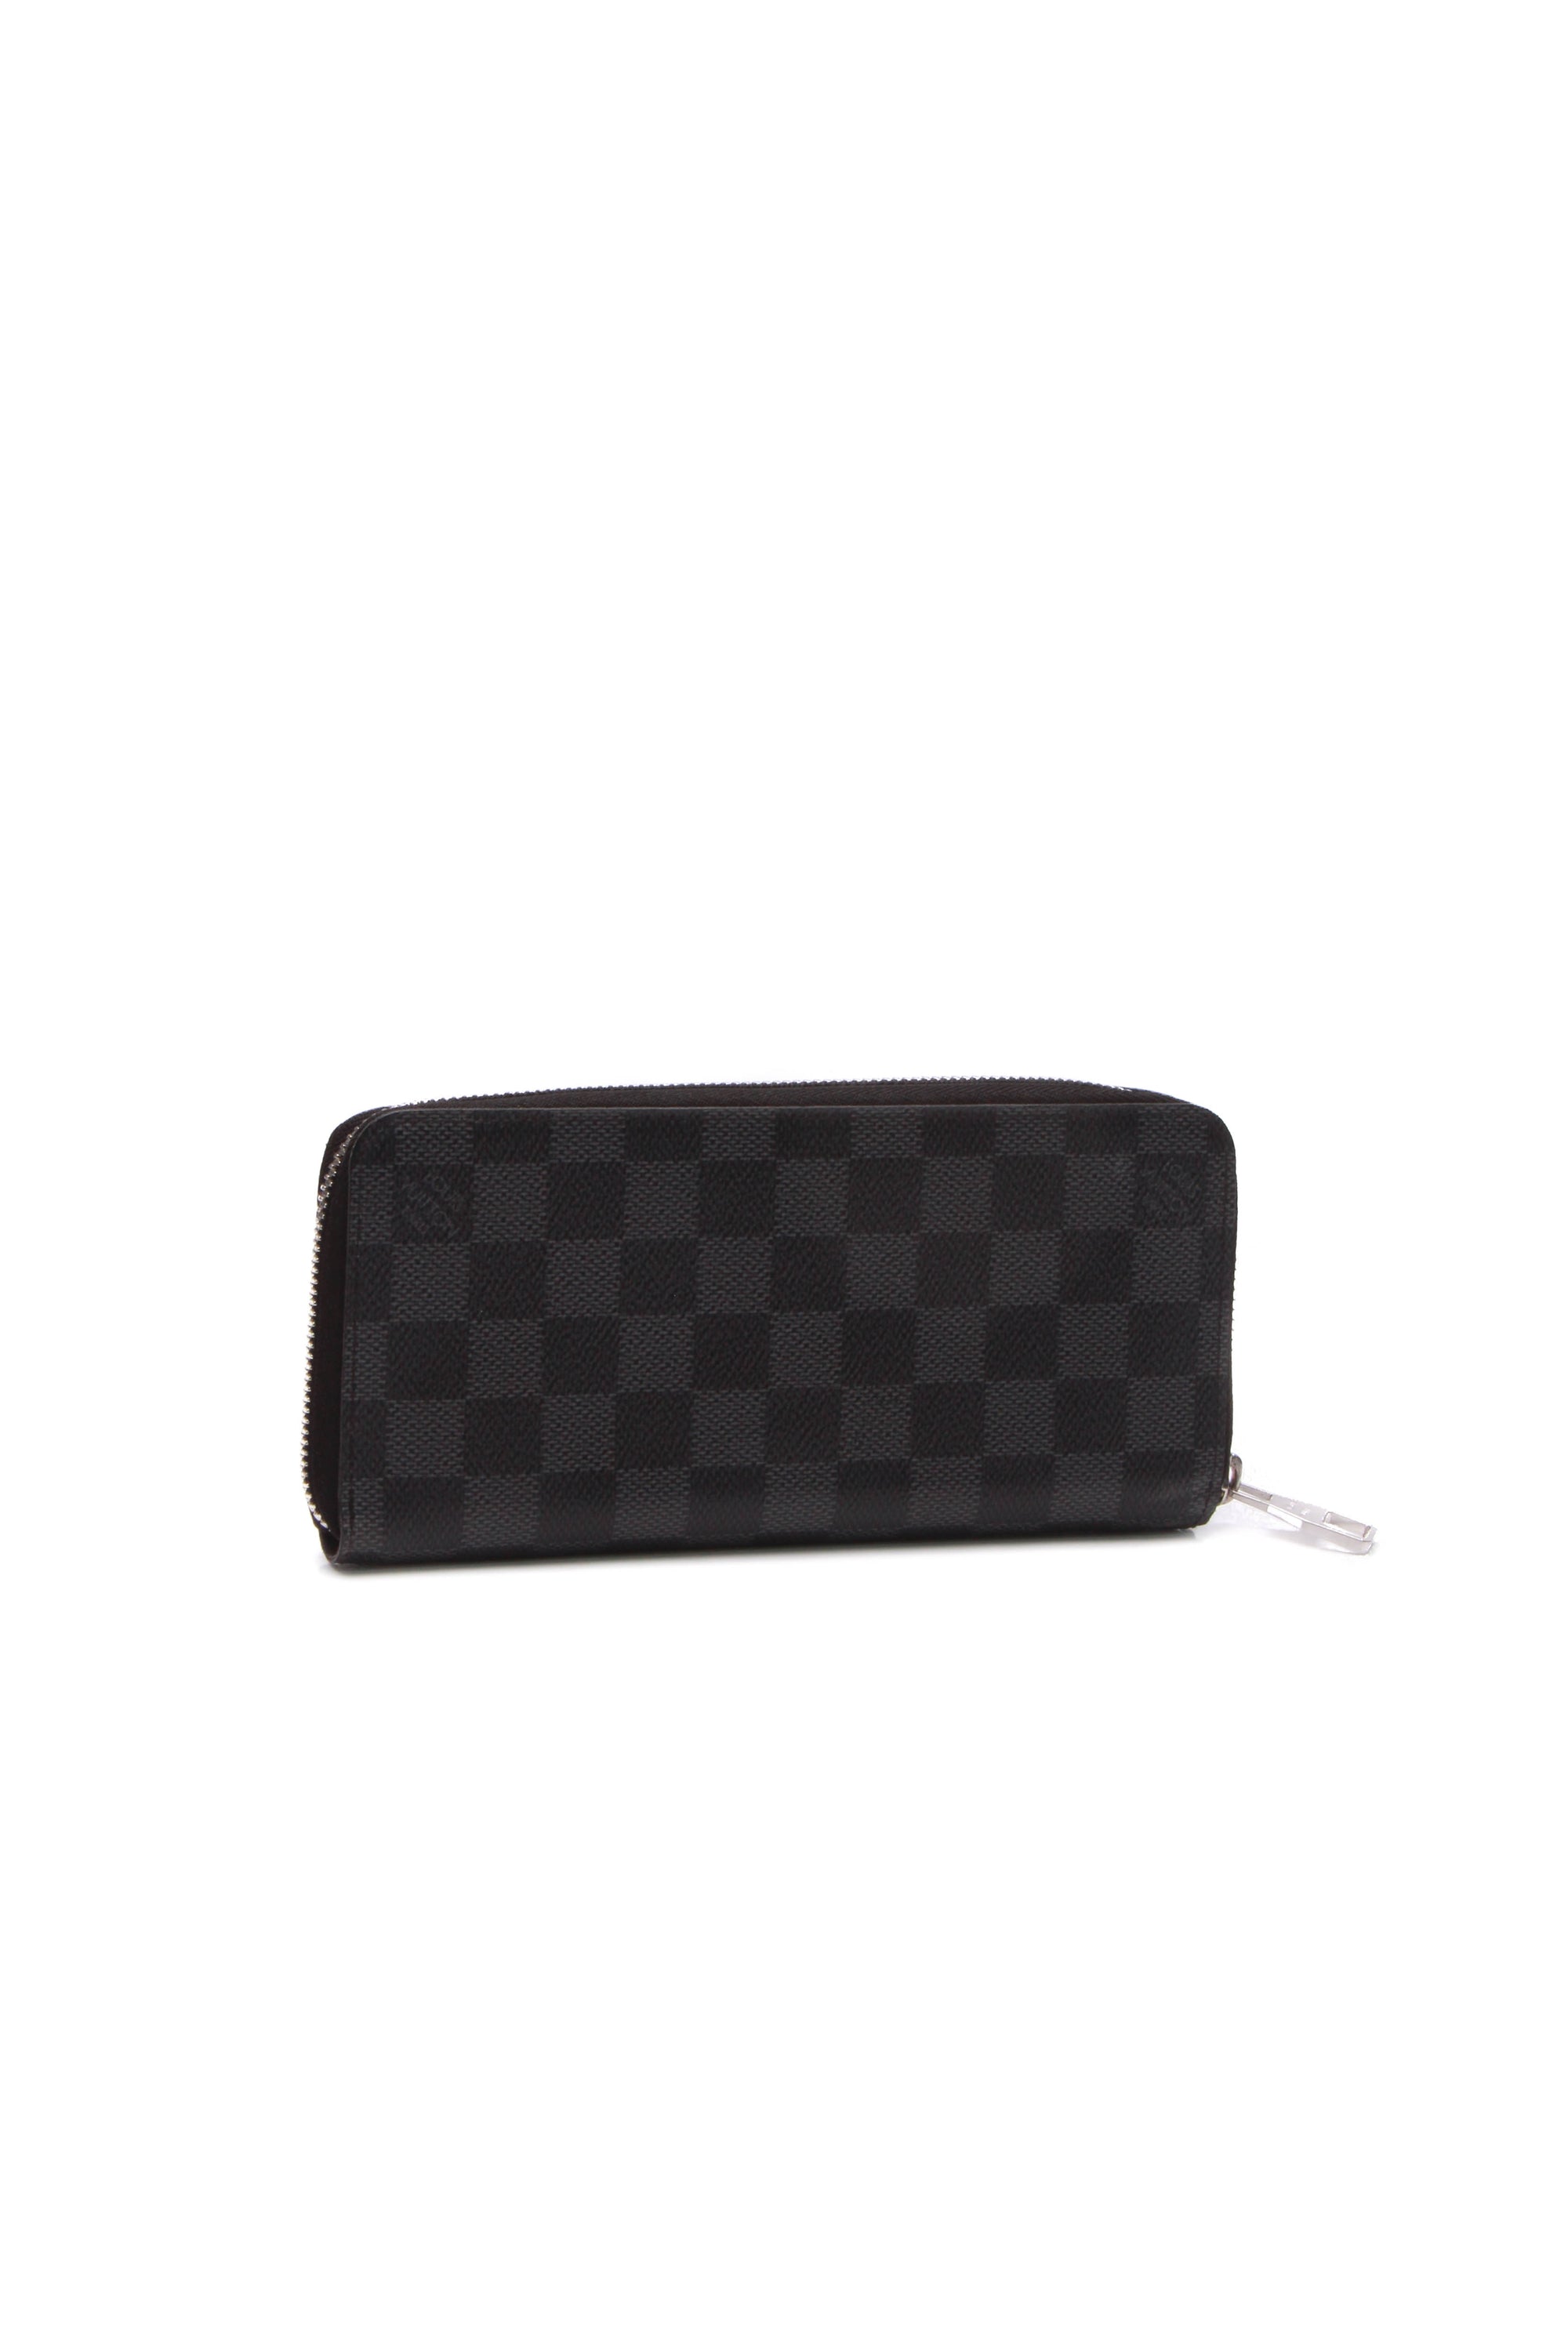 Louis Vuitton Greige Leather LockMini Wallet [Clearance Sale